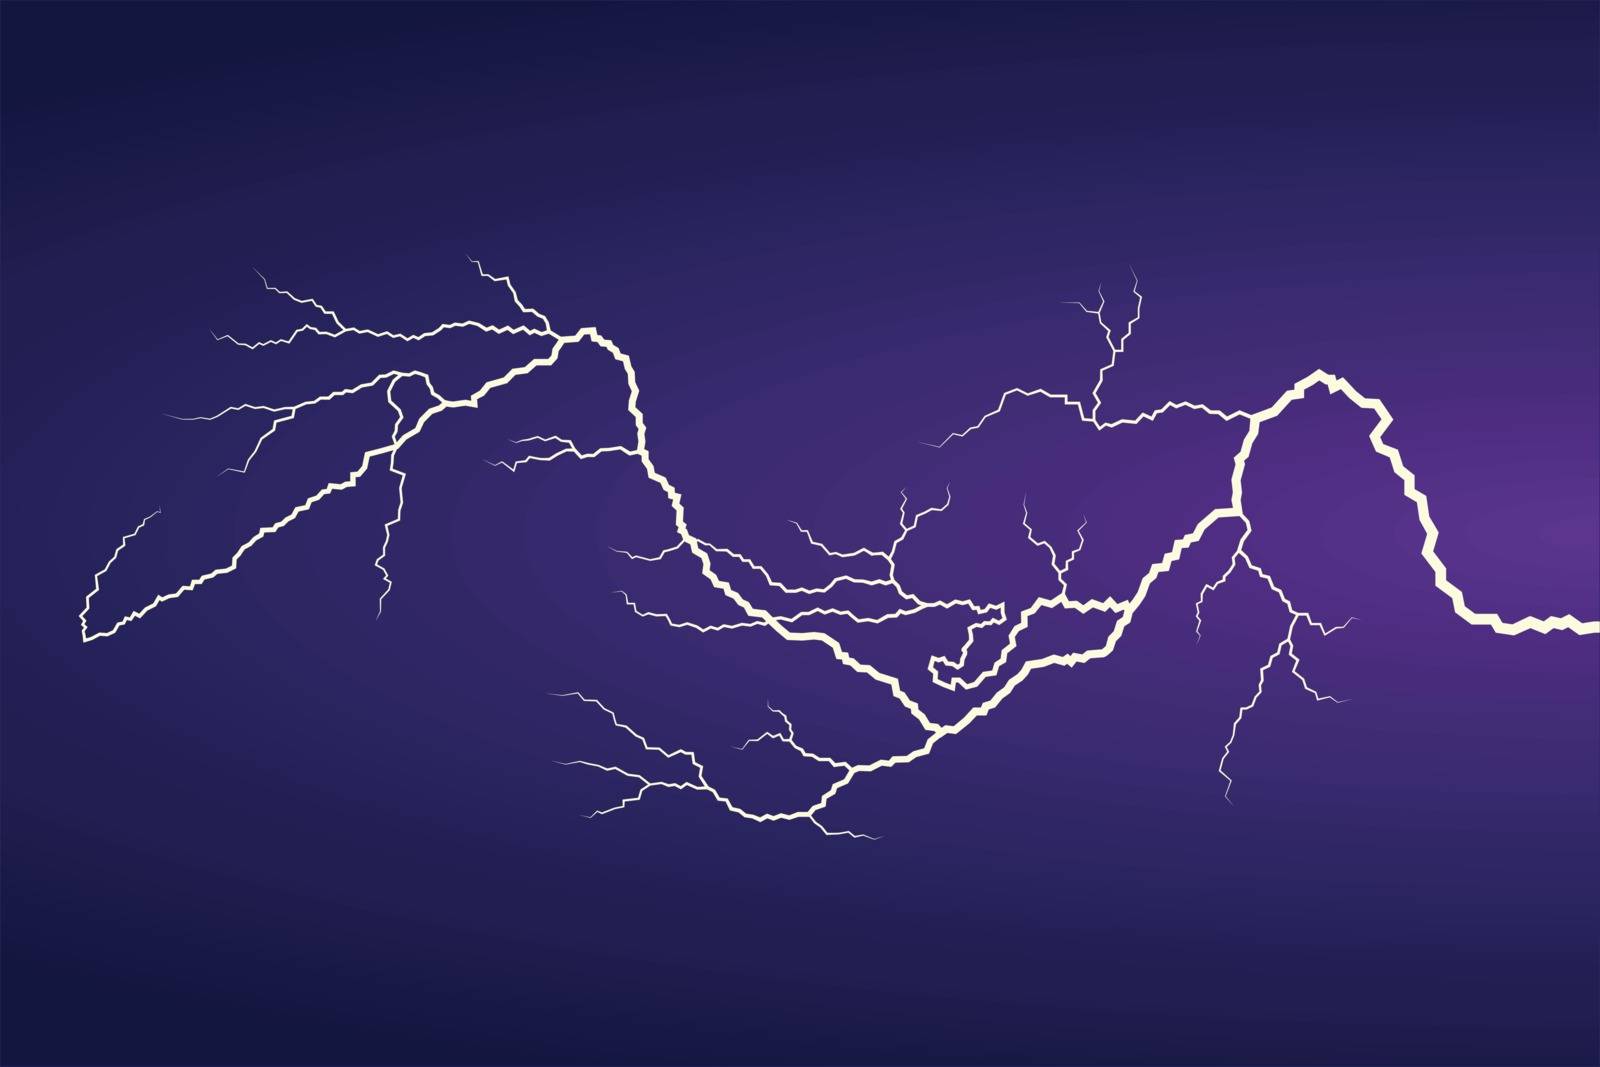 Single horizontal lightning by kornilov